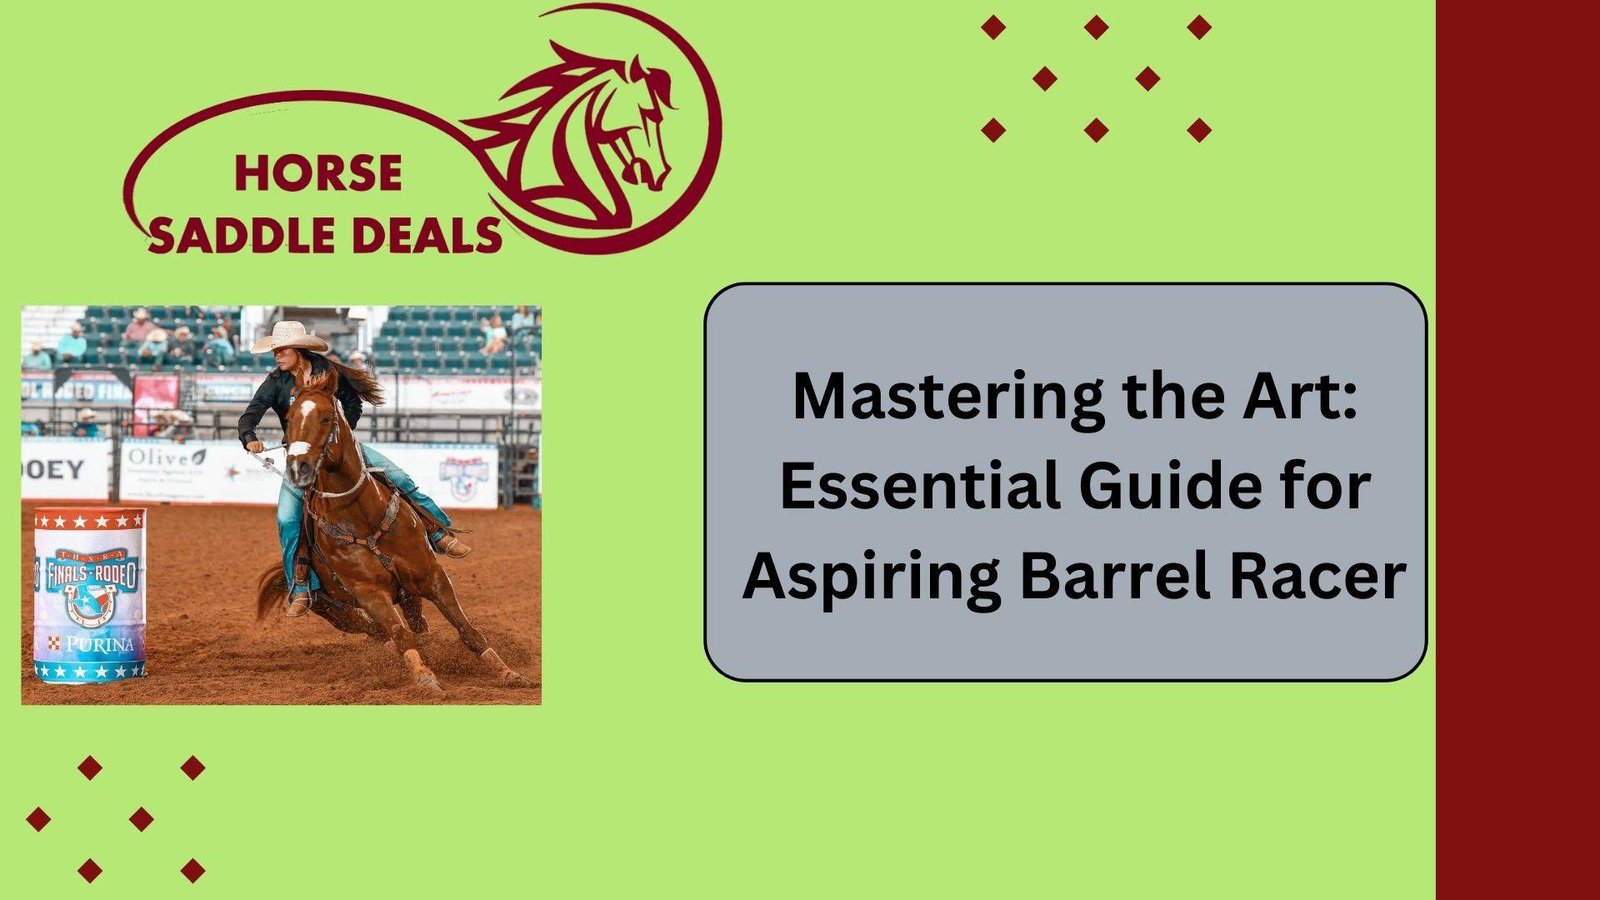 Mastering the Art: Essential Guide for Aspiring Barrel Racer